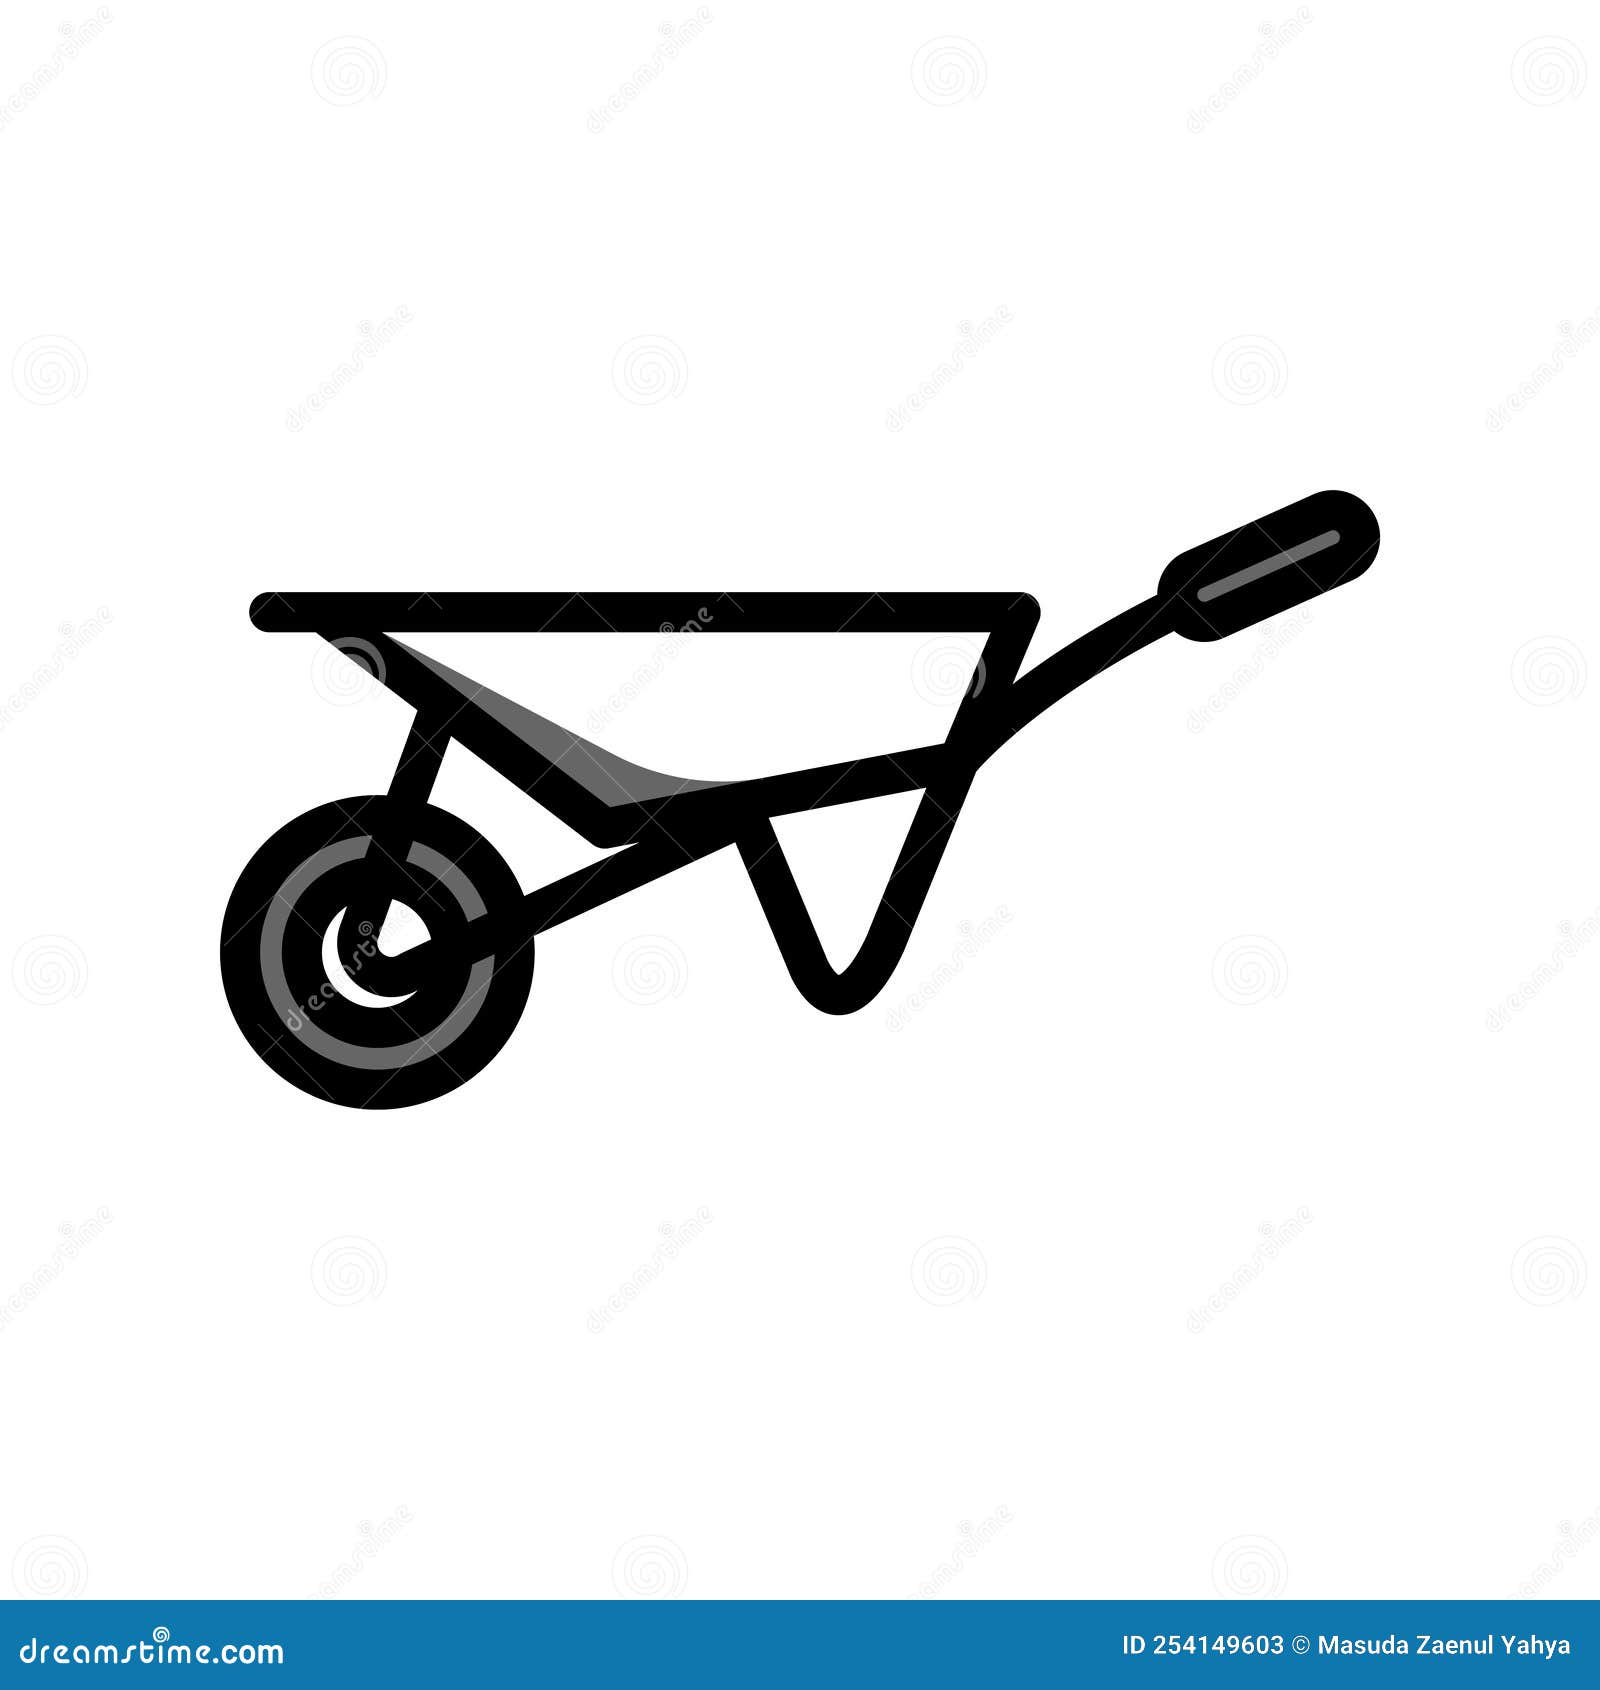 Illustration Vector Graphic of Wheelbarrow Icon Stock Vector ...